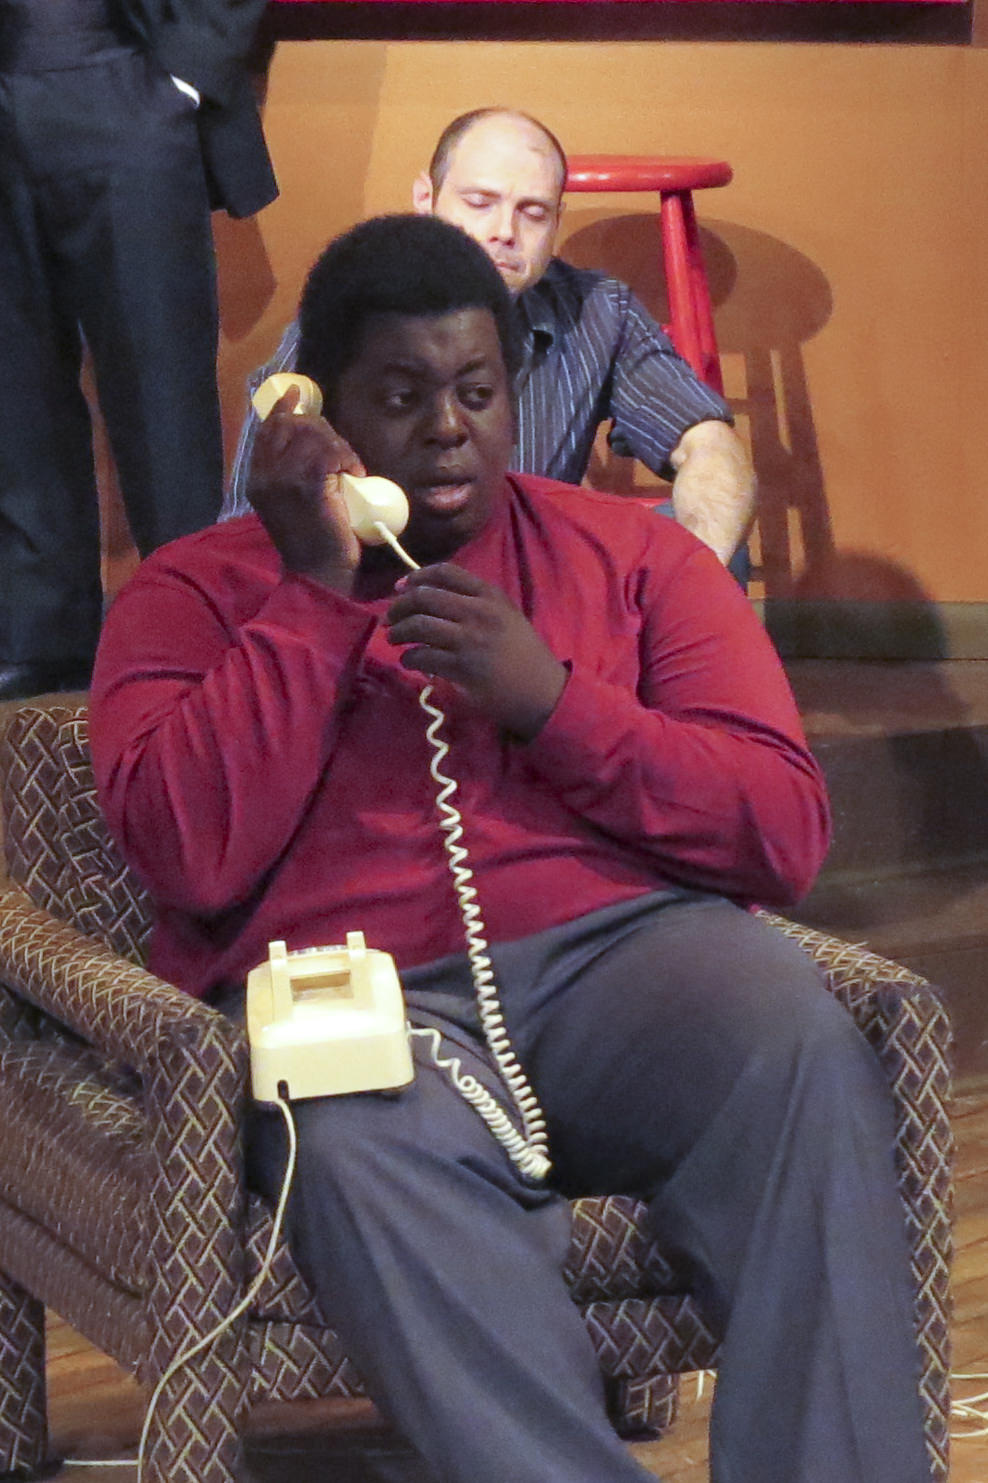 Bernard (Joshua Thompson) makes a harrowing phone call as Donald (Jake Williams) looks on.
Photo by Arienne Davey